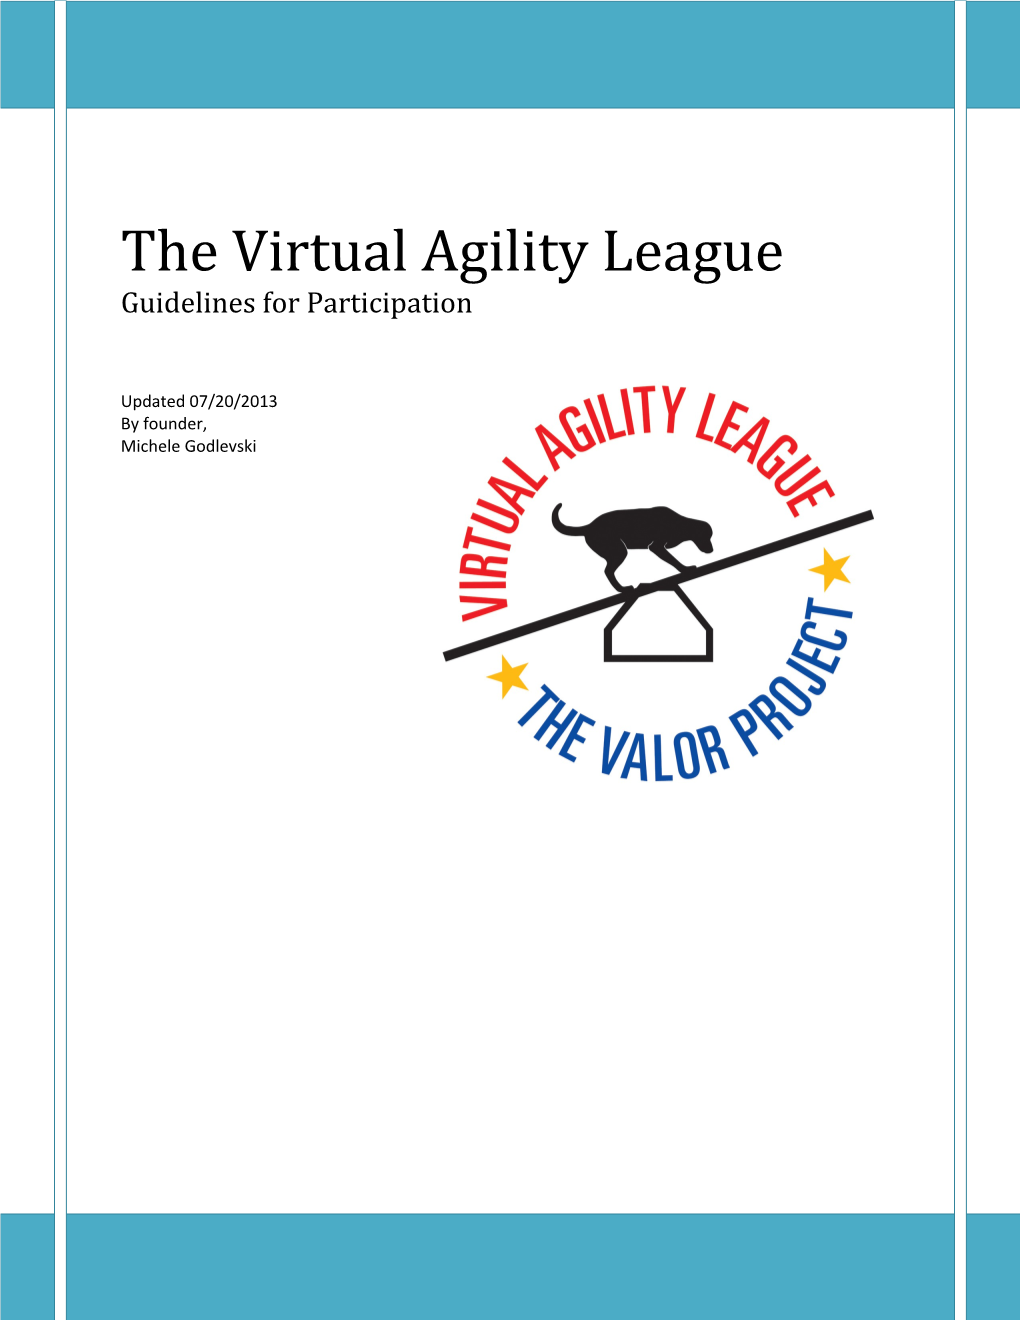 The Virtual Agility League